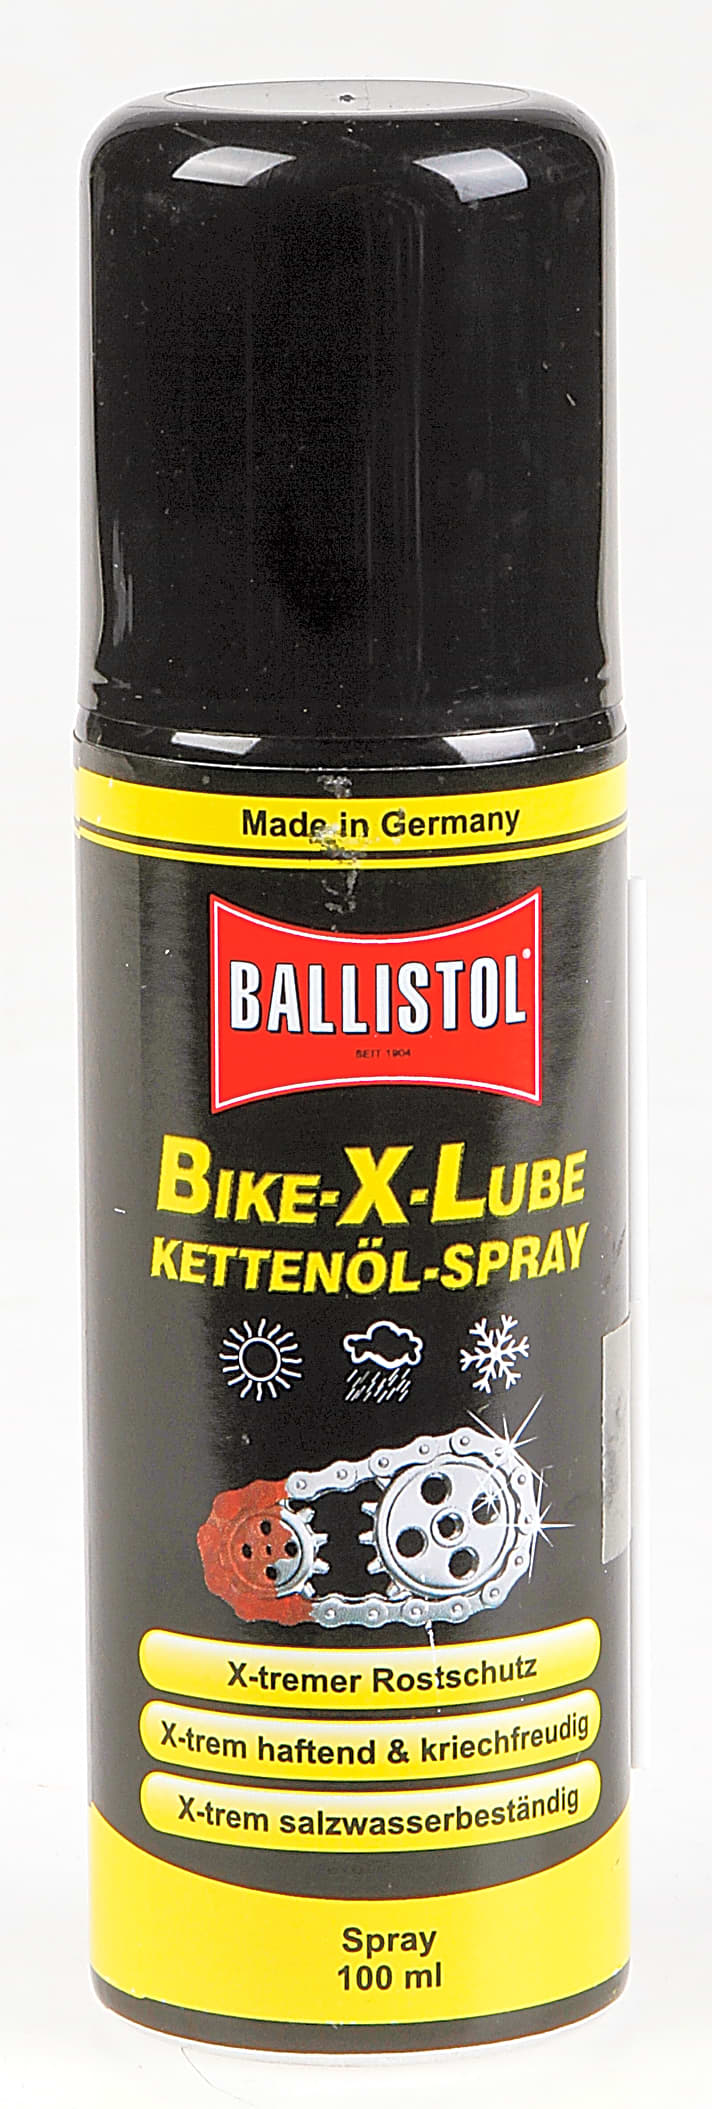   Ballistol Bike-X-Lube